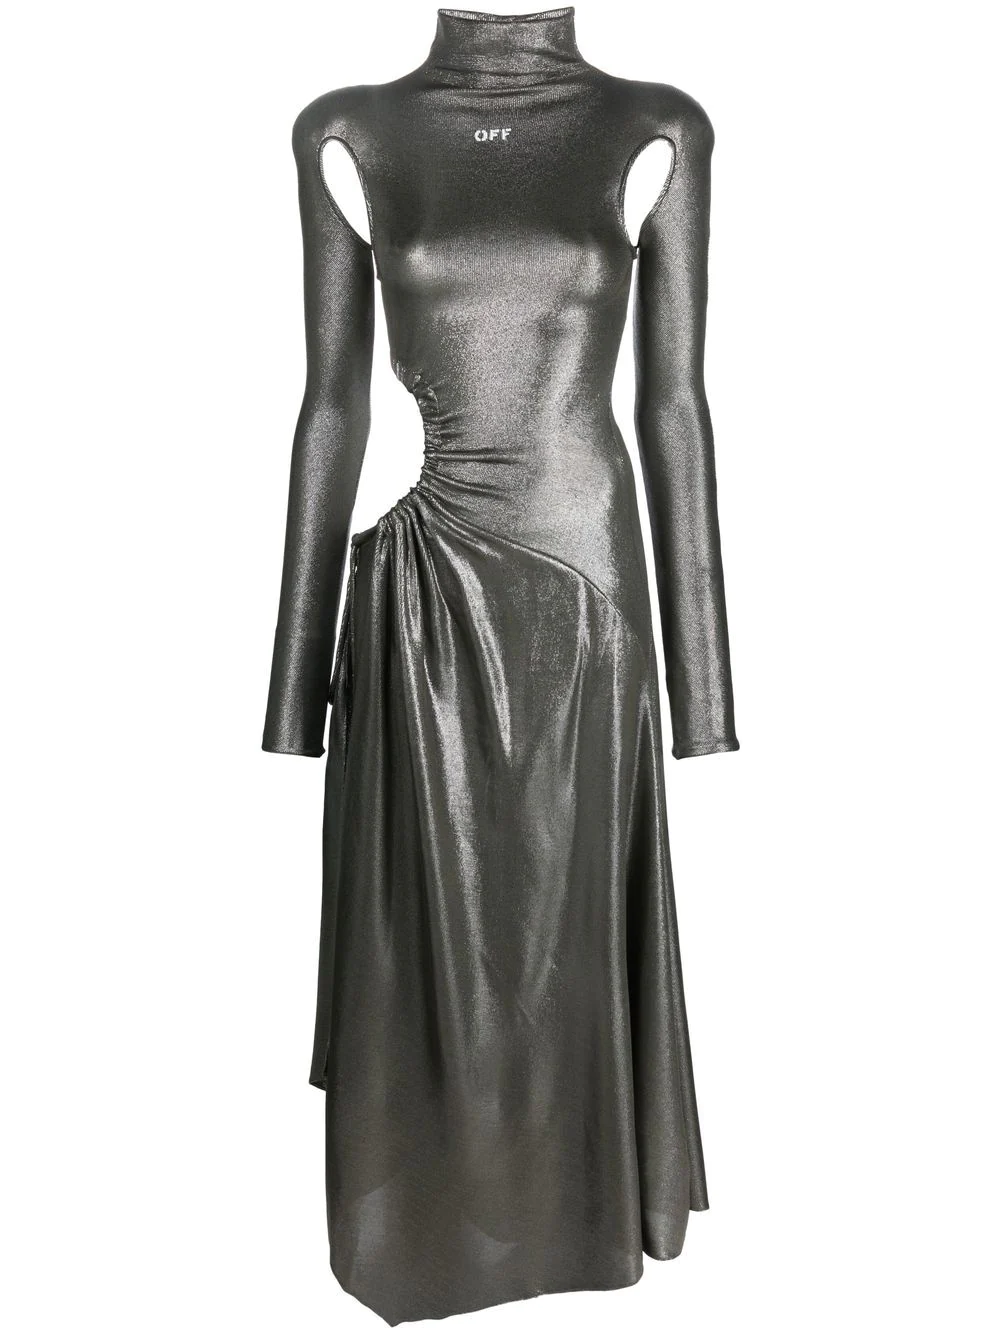 Silver metallic full length dress